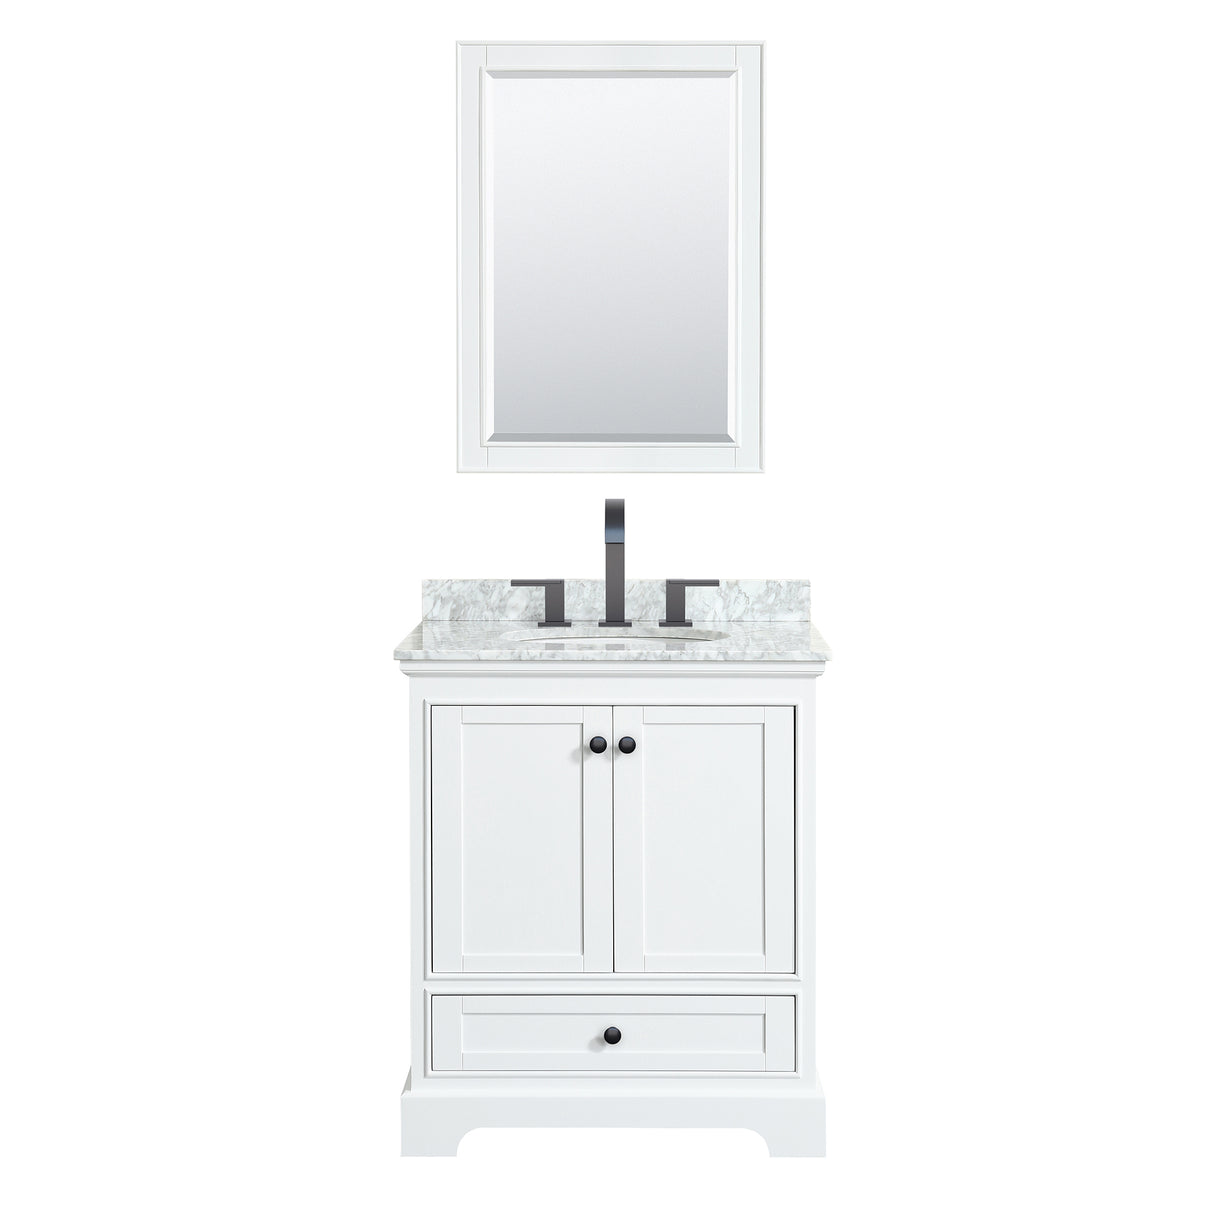 Deborah 30 Inch Single Bathroom Vanity in White White Carrara Marble Countertop Undermount Oval Sink Matte Black Trim 24 Inch Mirror